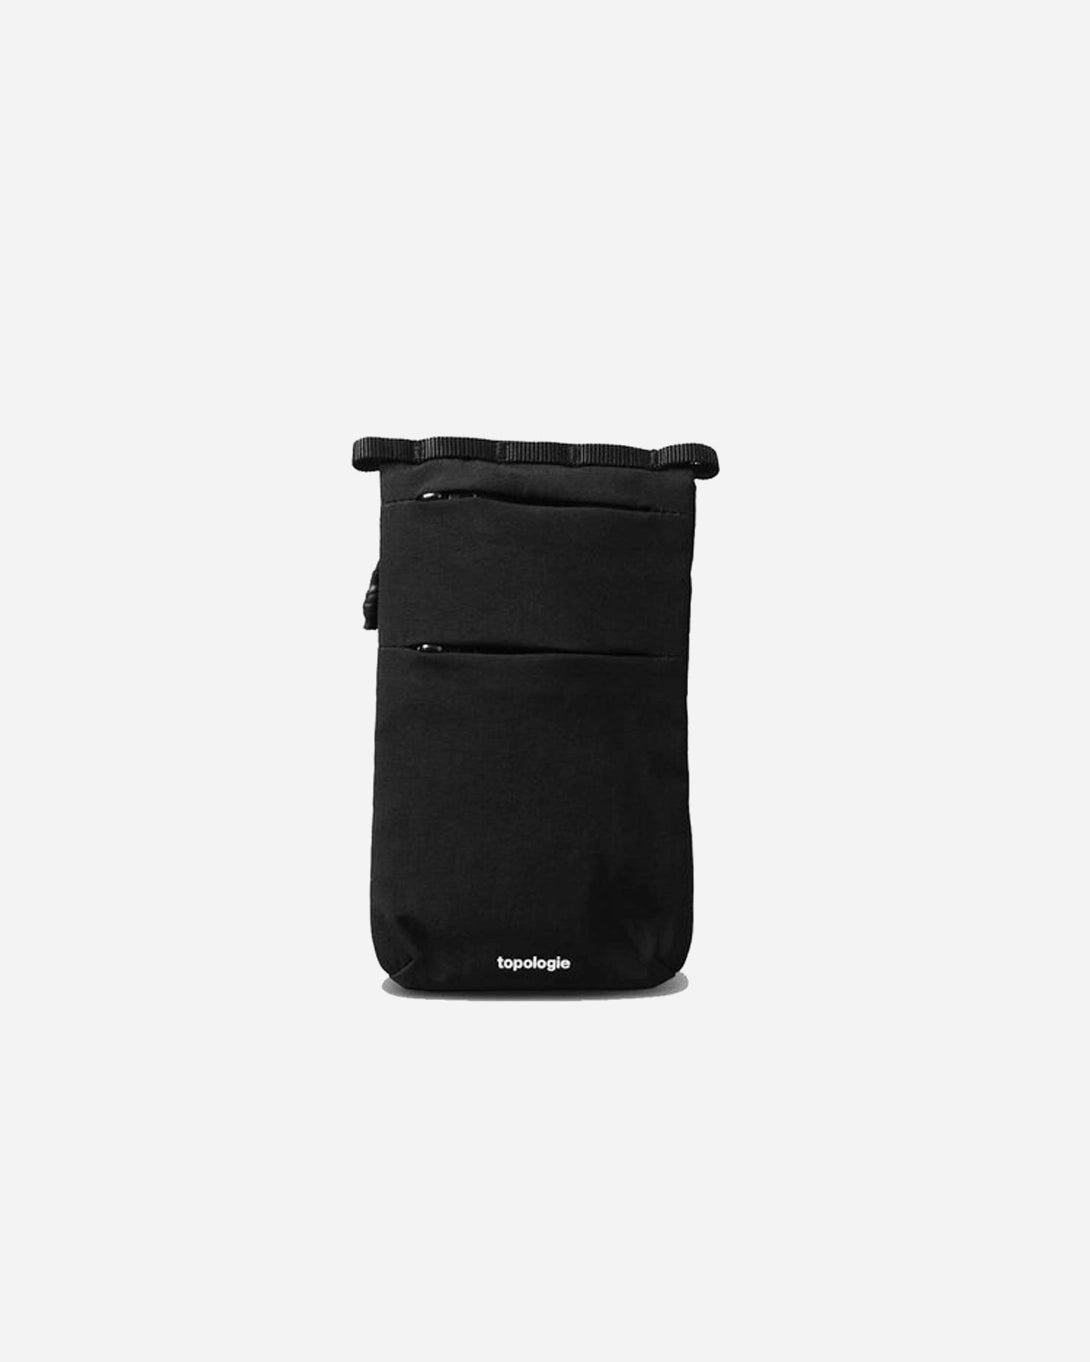 Black Dry Phone Sacoche Topologie Strap Bag